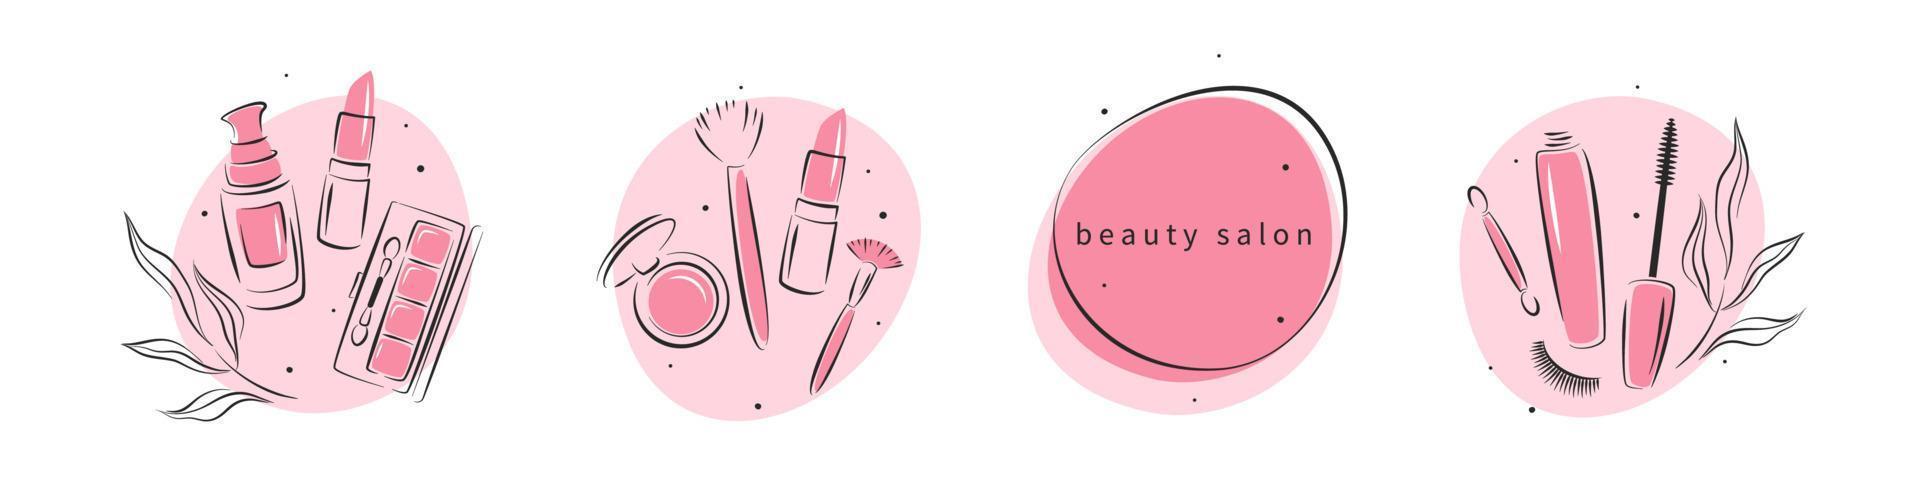 Beauty salon logos set. Makeup tools, cosmetic brushes, lipstick, blush, eyelash extension, brows. Vector illustration